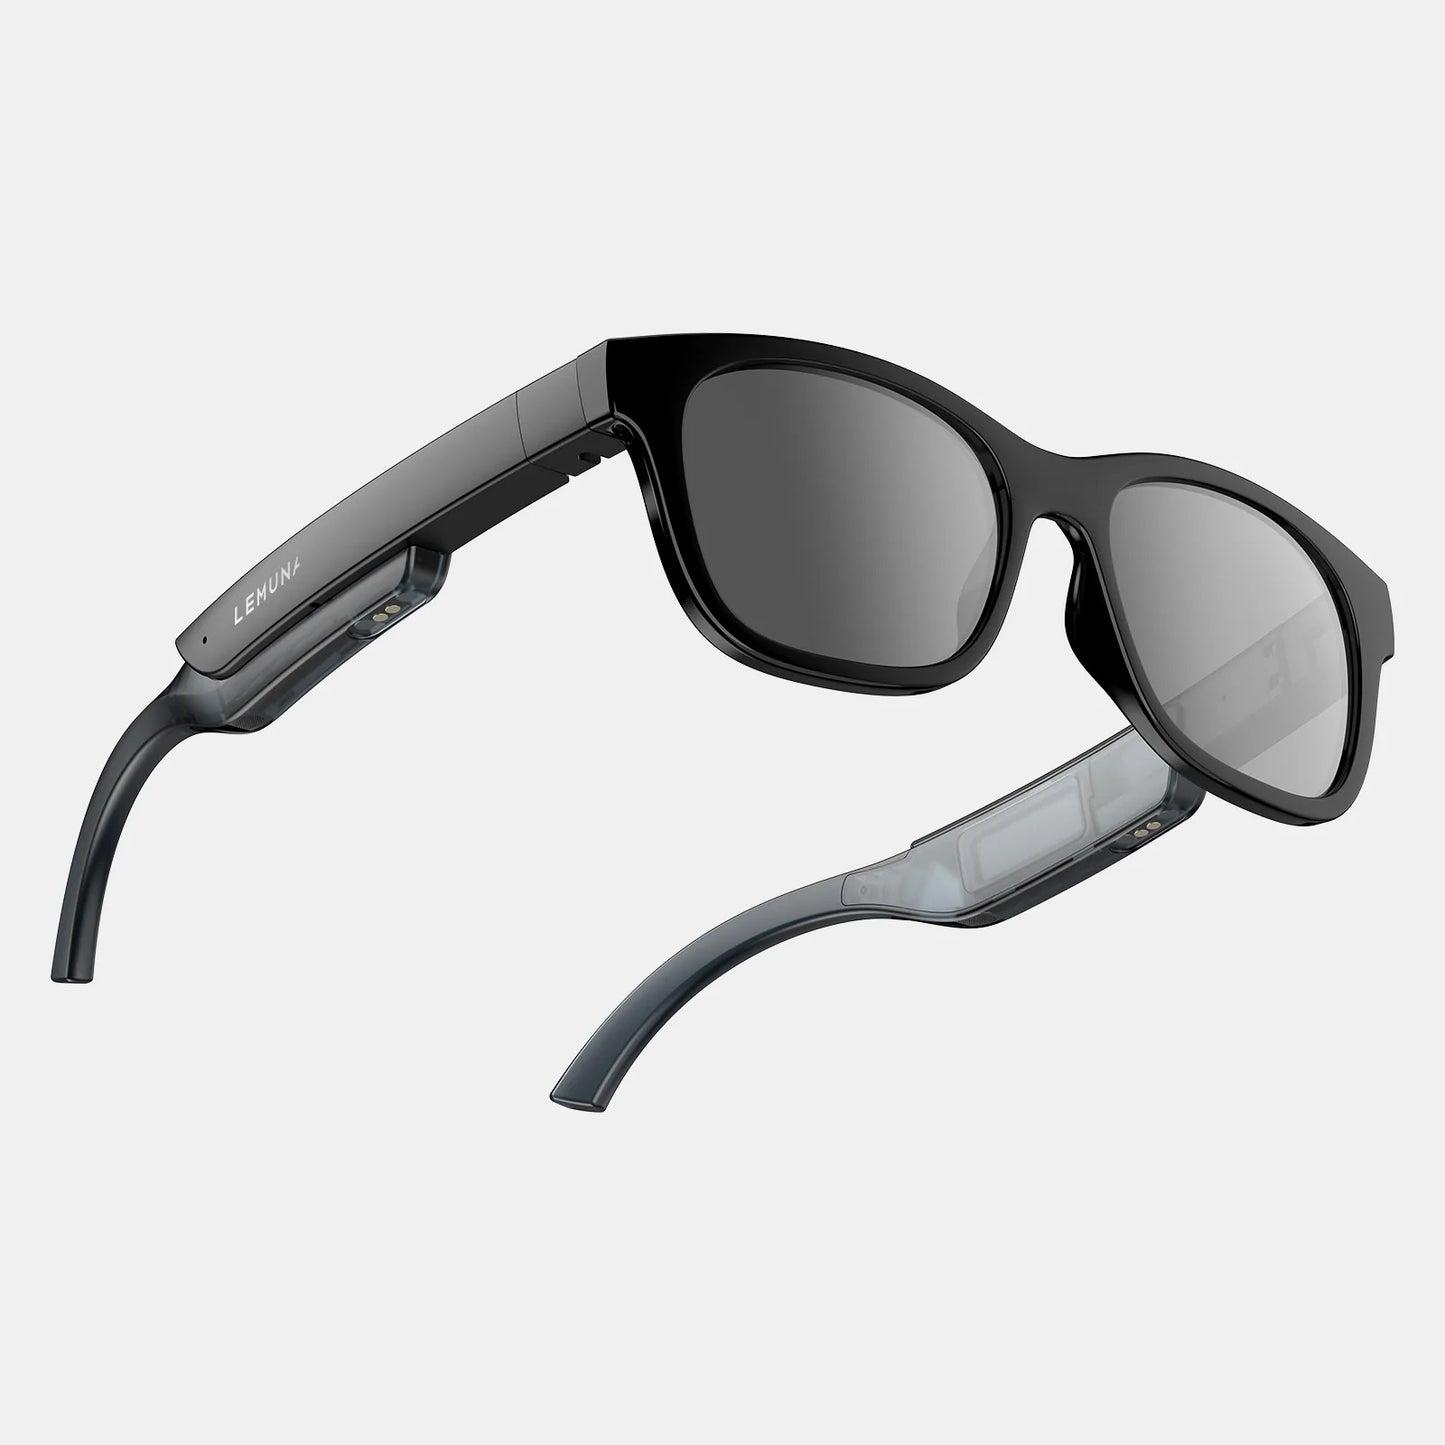 LeMuna- True Sensible Audio Glasses with Modular Frames